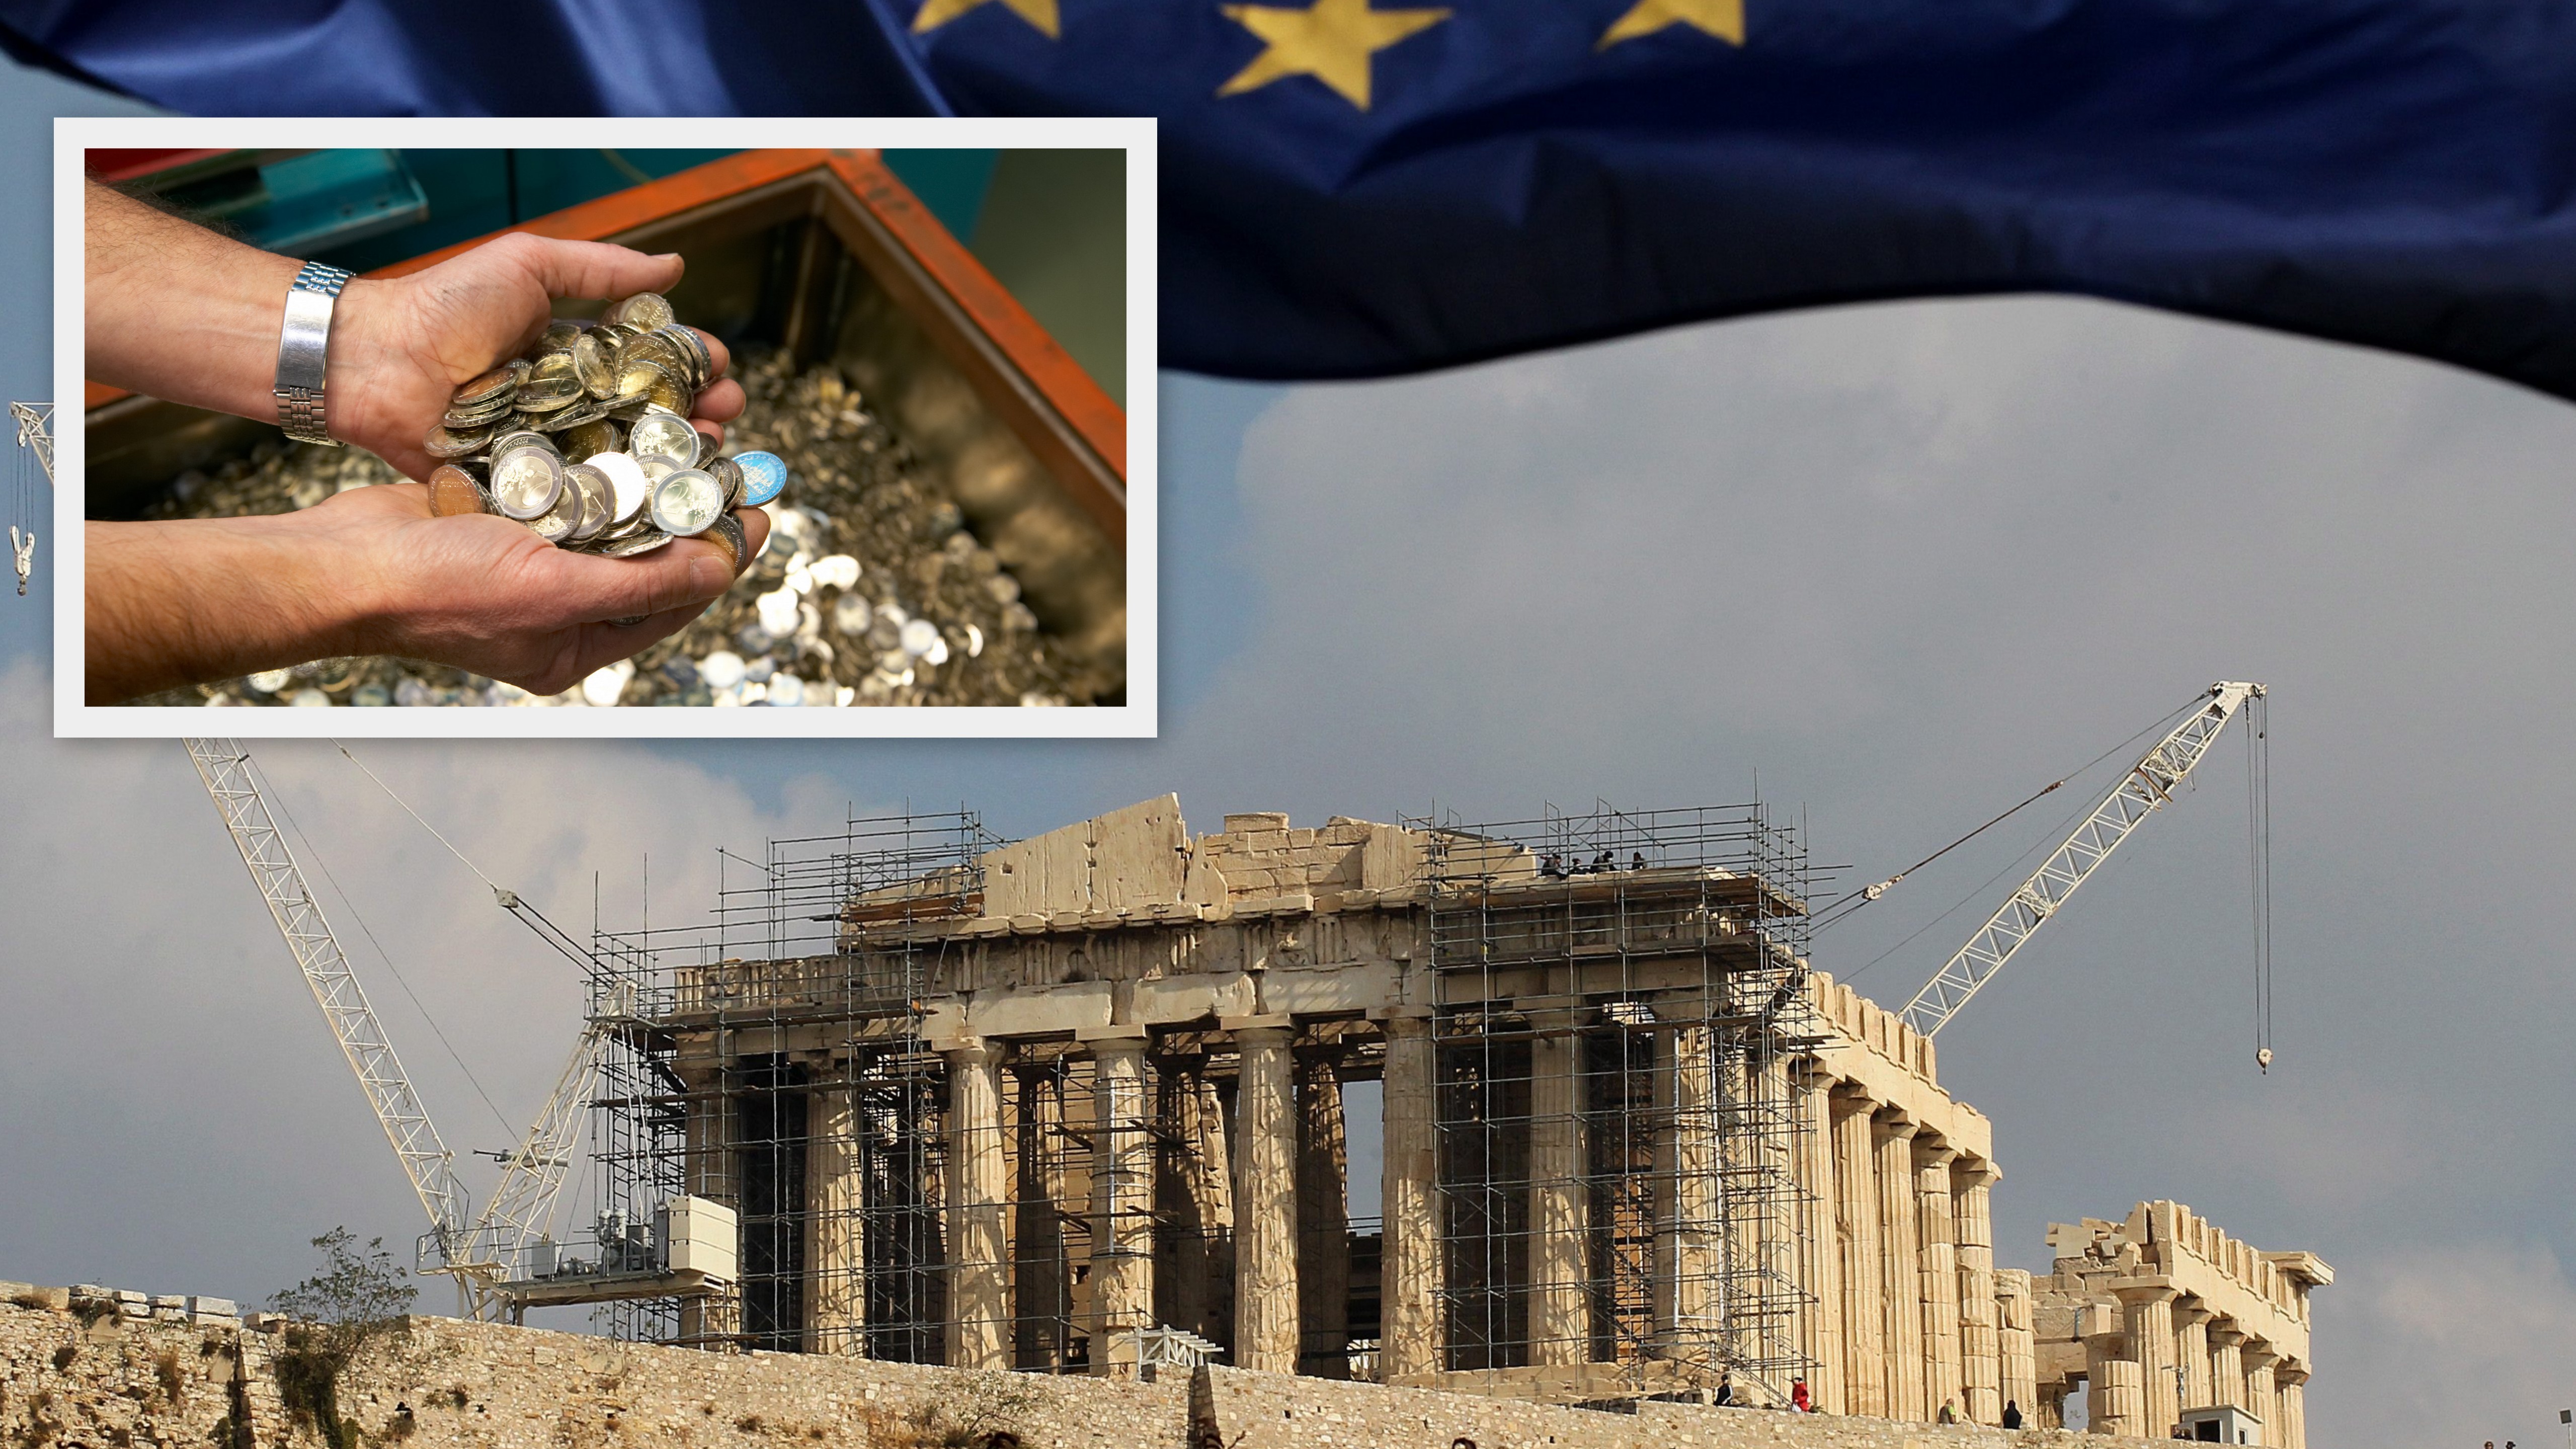 Grécko_koláž_peniaze_akropola_odchod z eurozóny